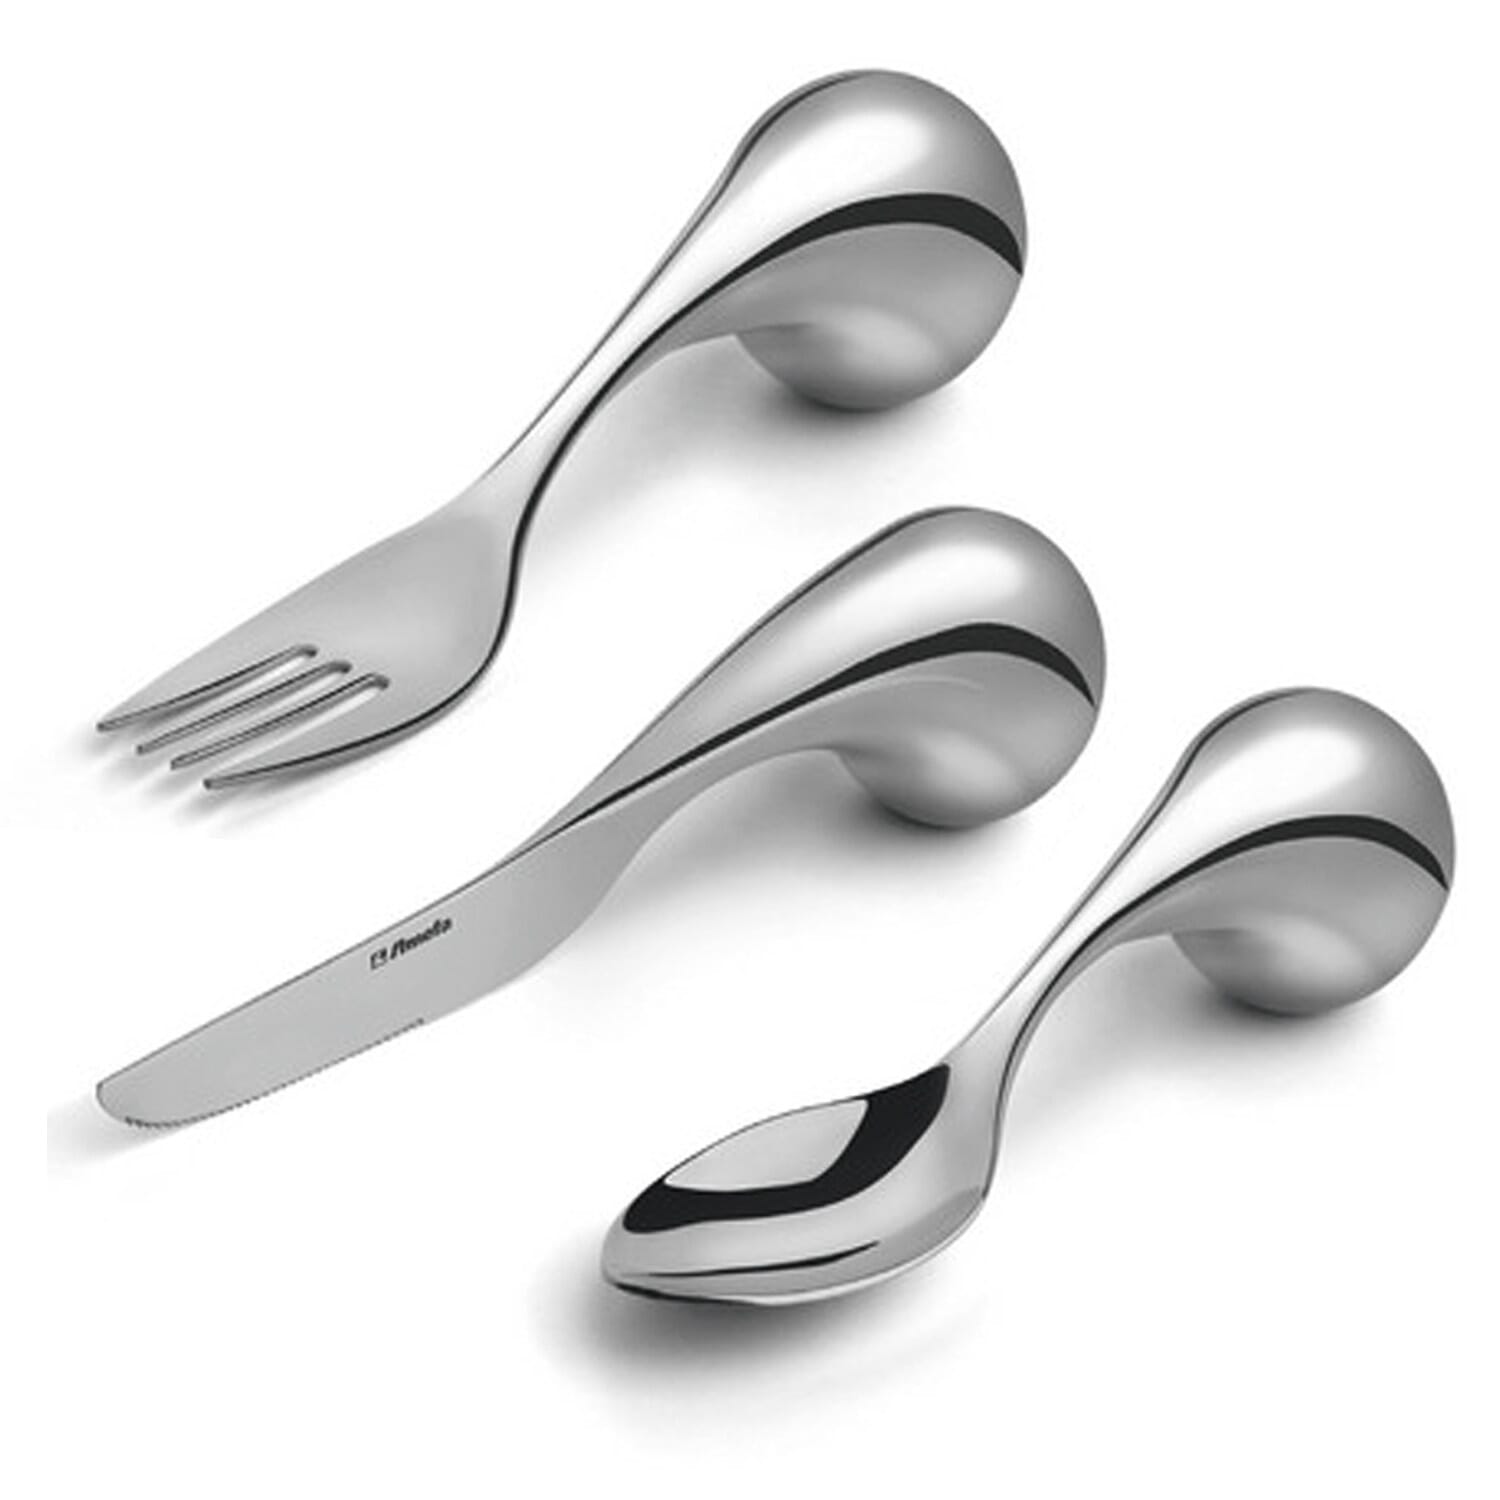 View Amefa Integrale Cutlery Full Set information